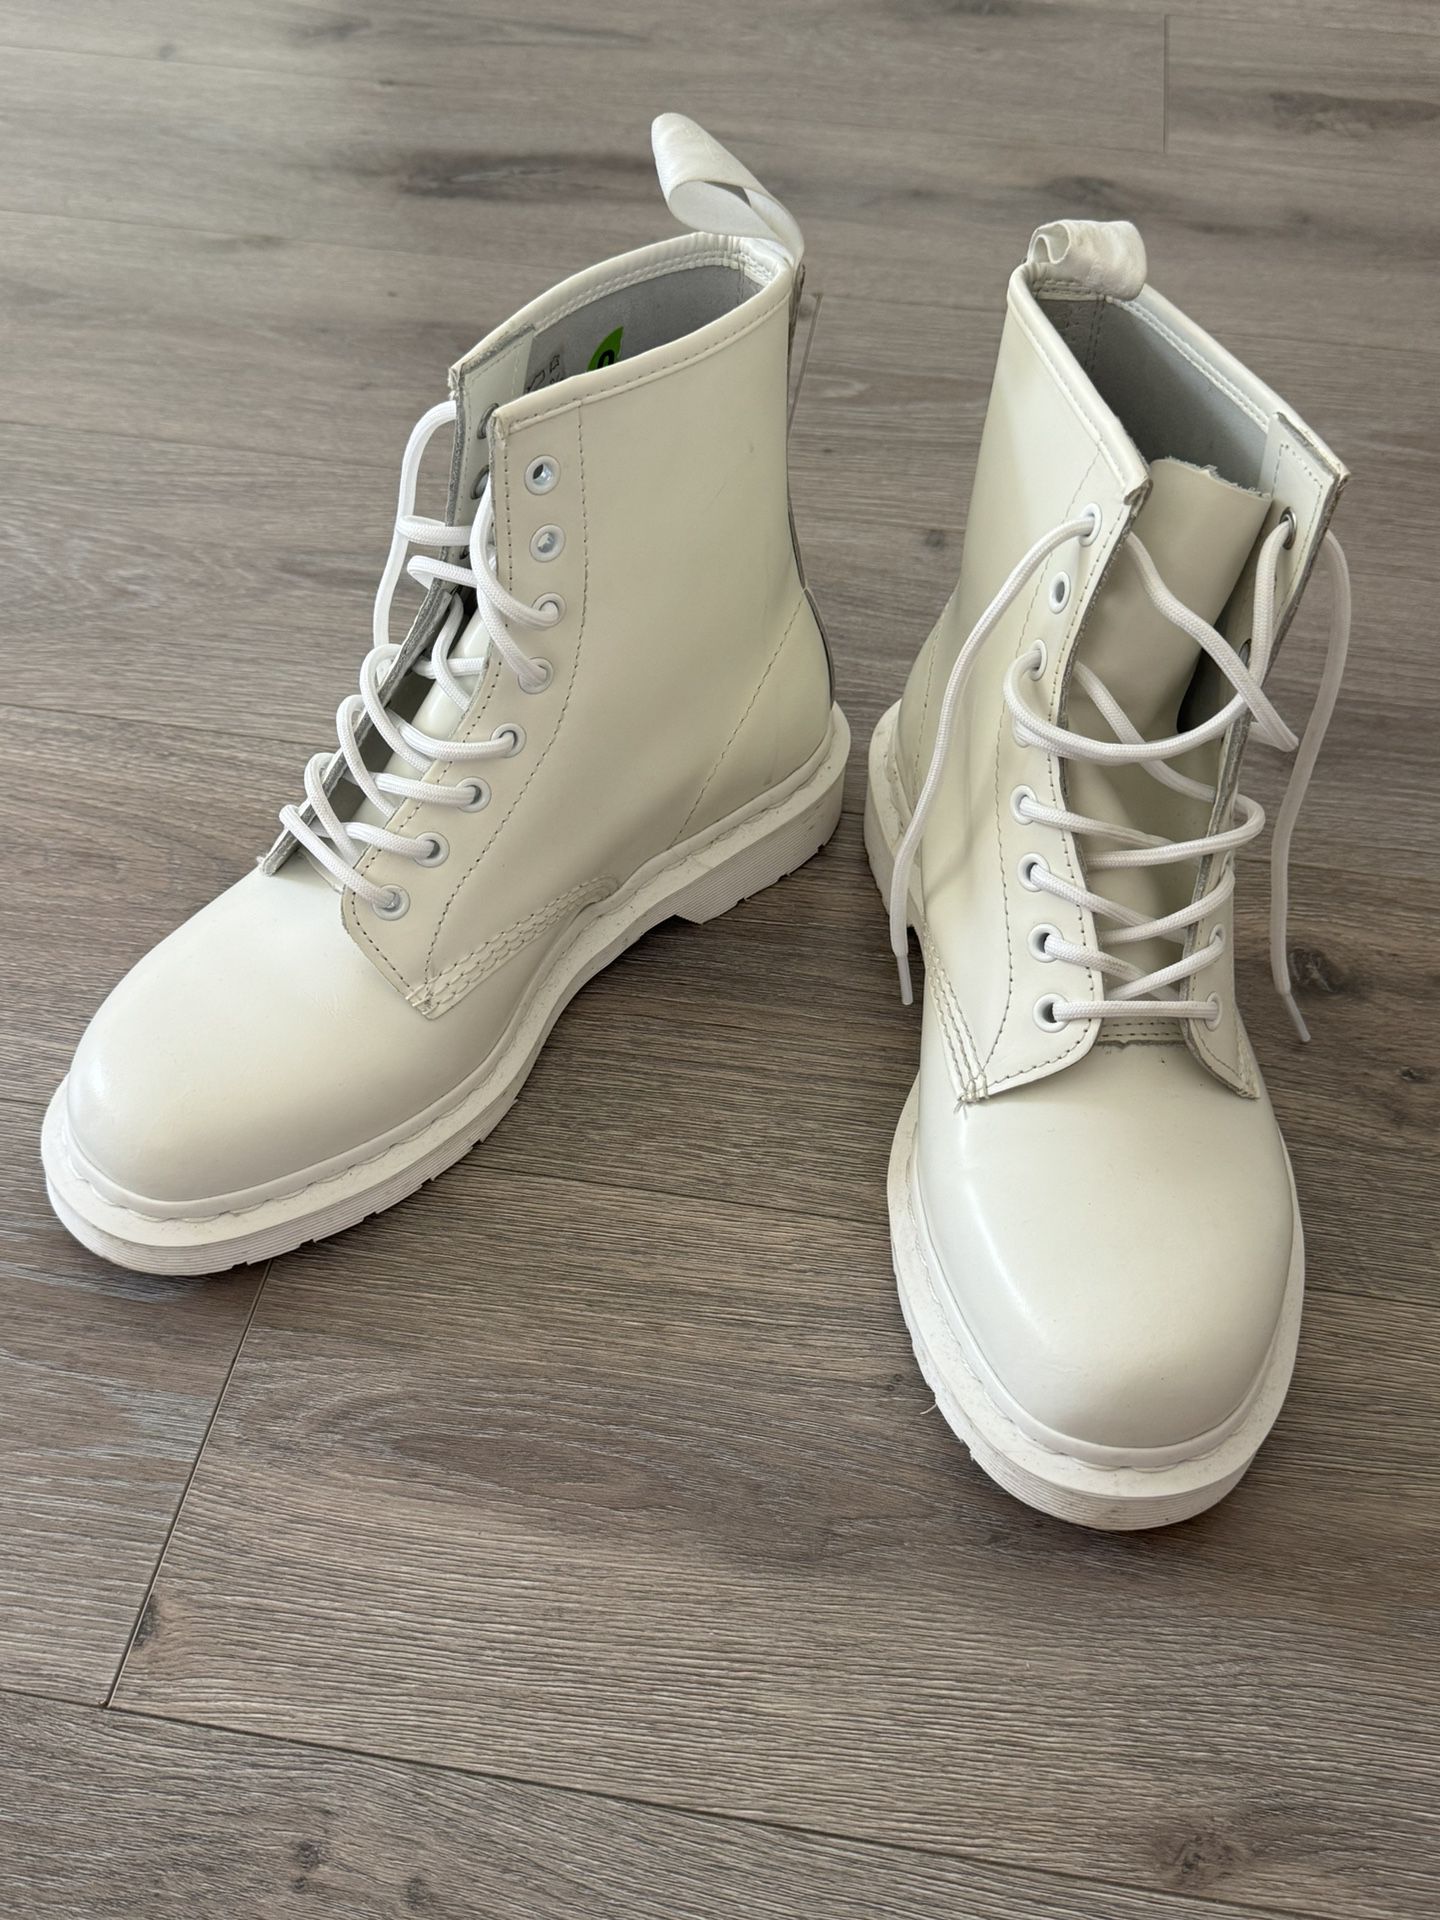 doc martens white combat boots 